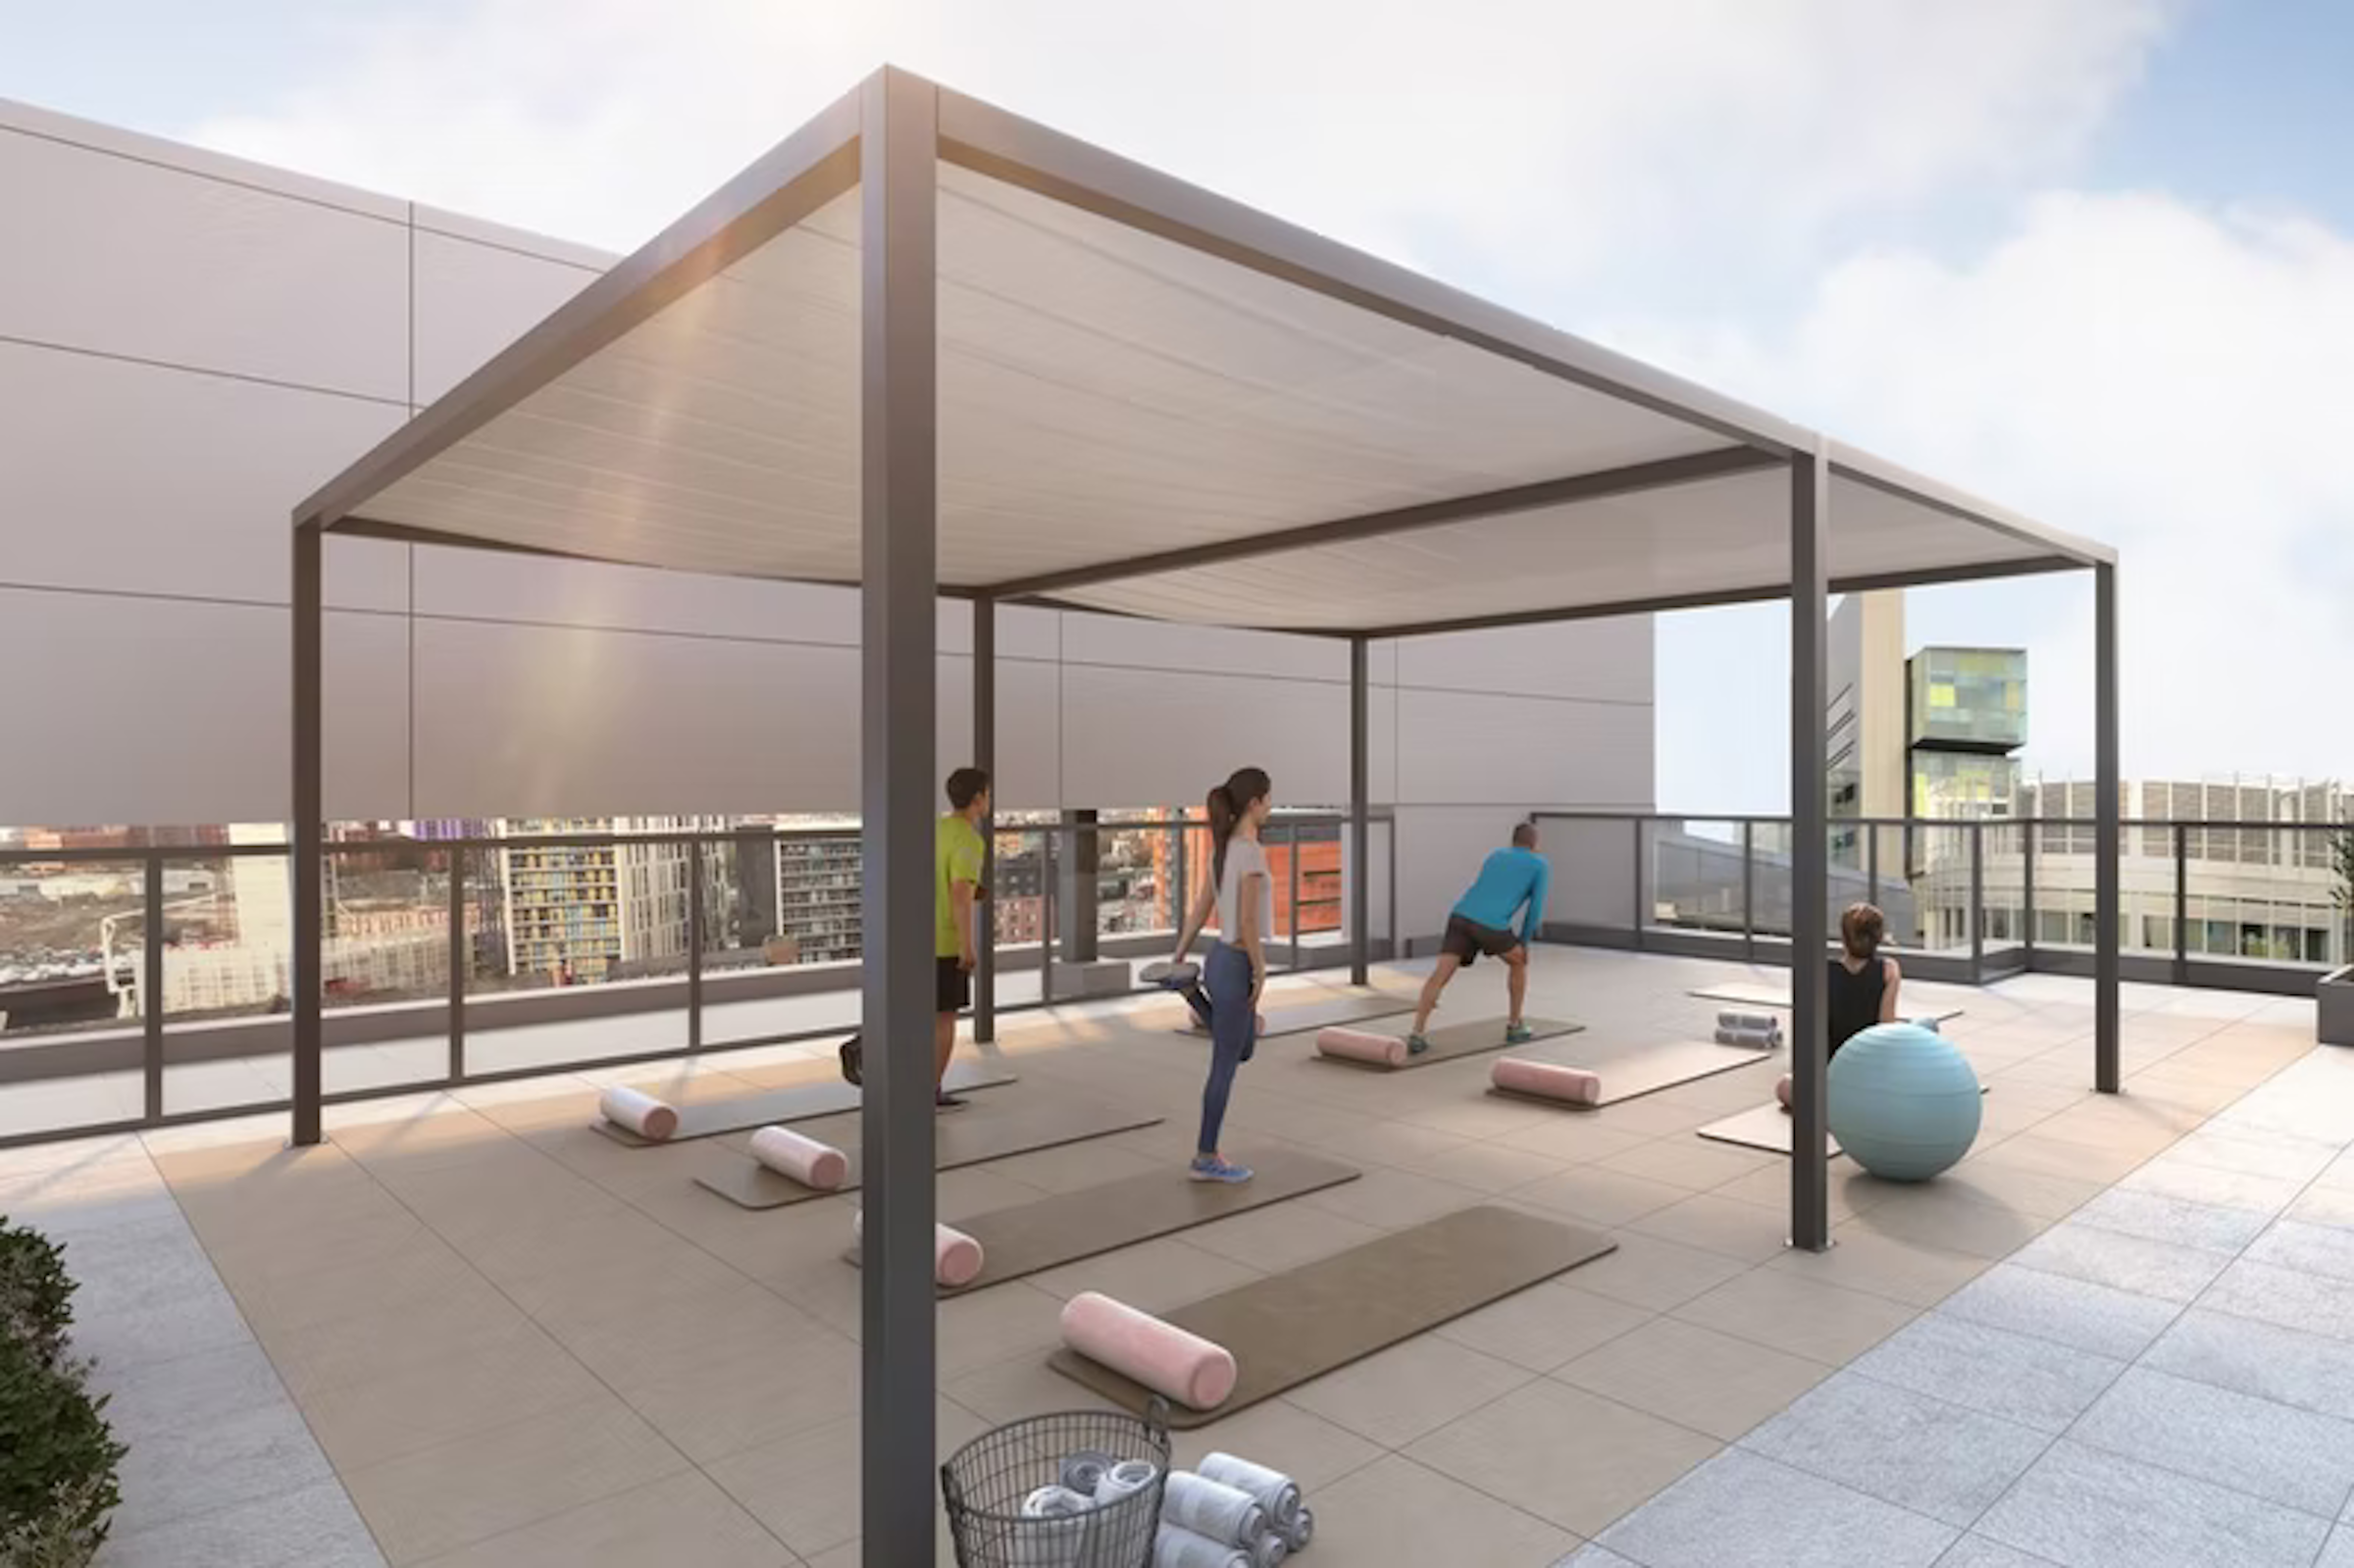 Rooftop yoga studio to rent